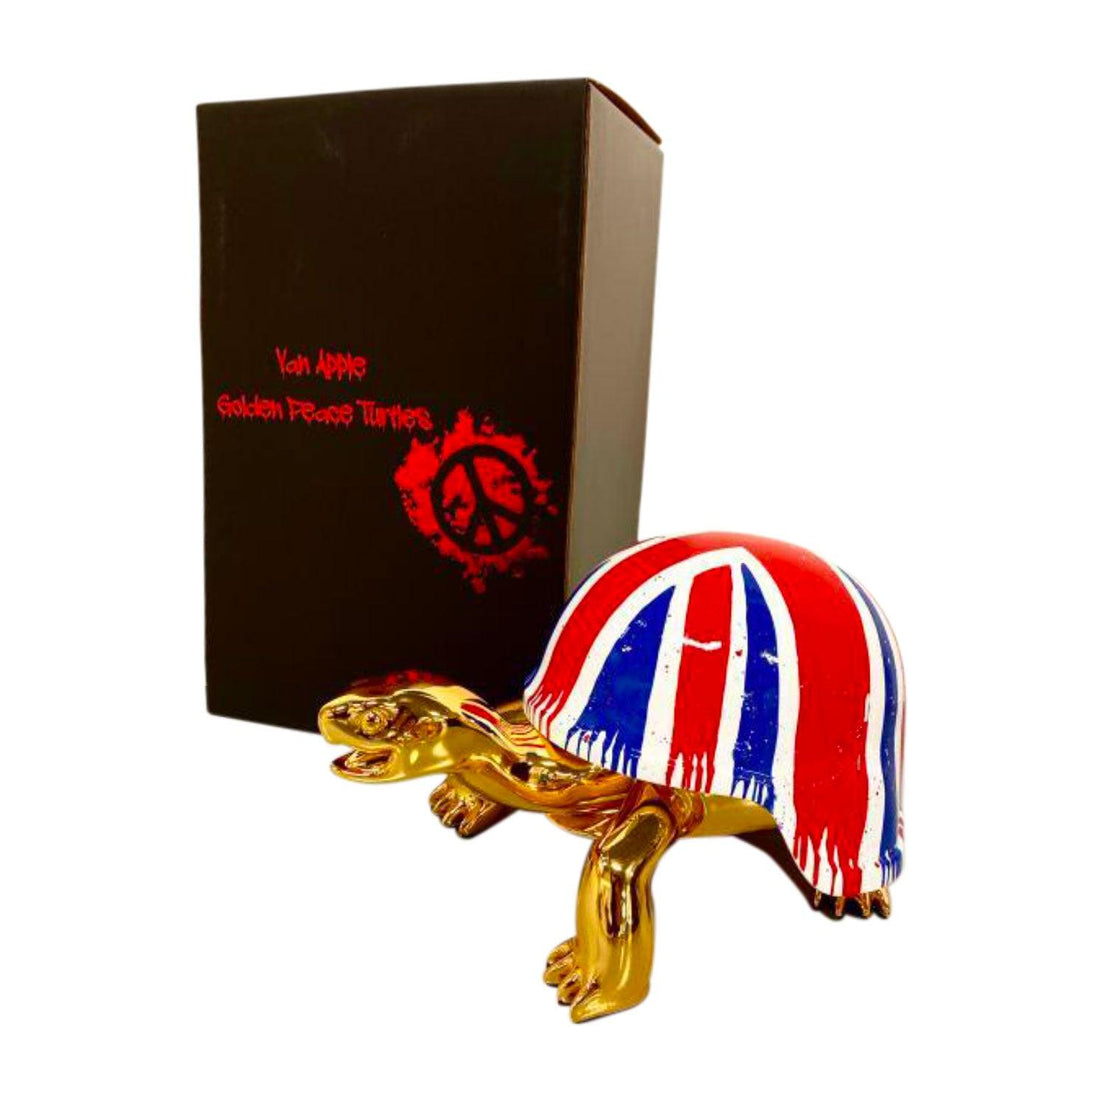 The Golden Peace Turtle We Love Union Jack